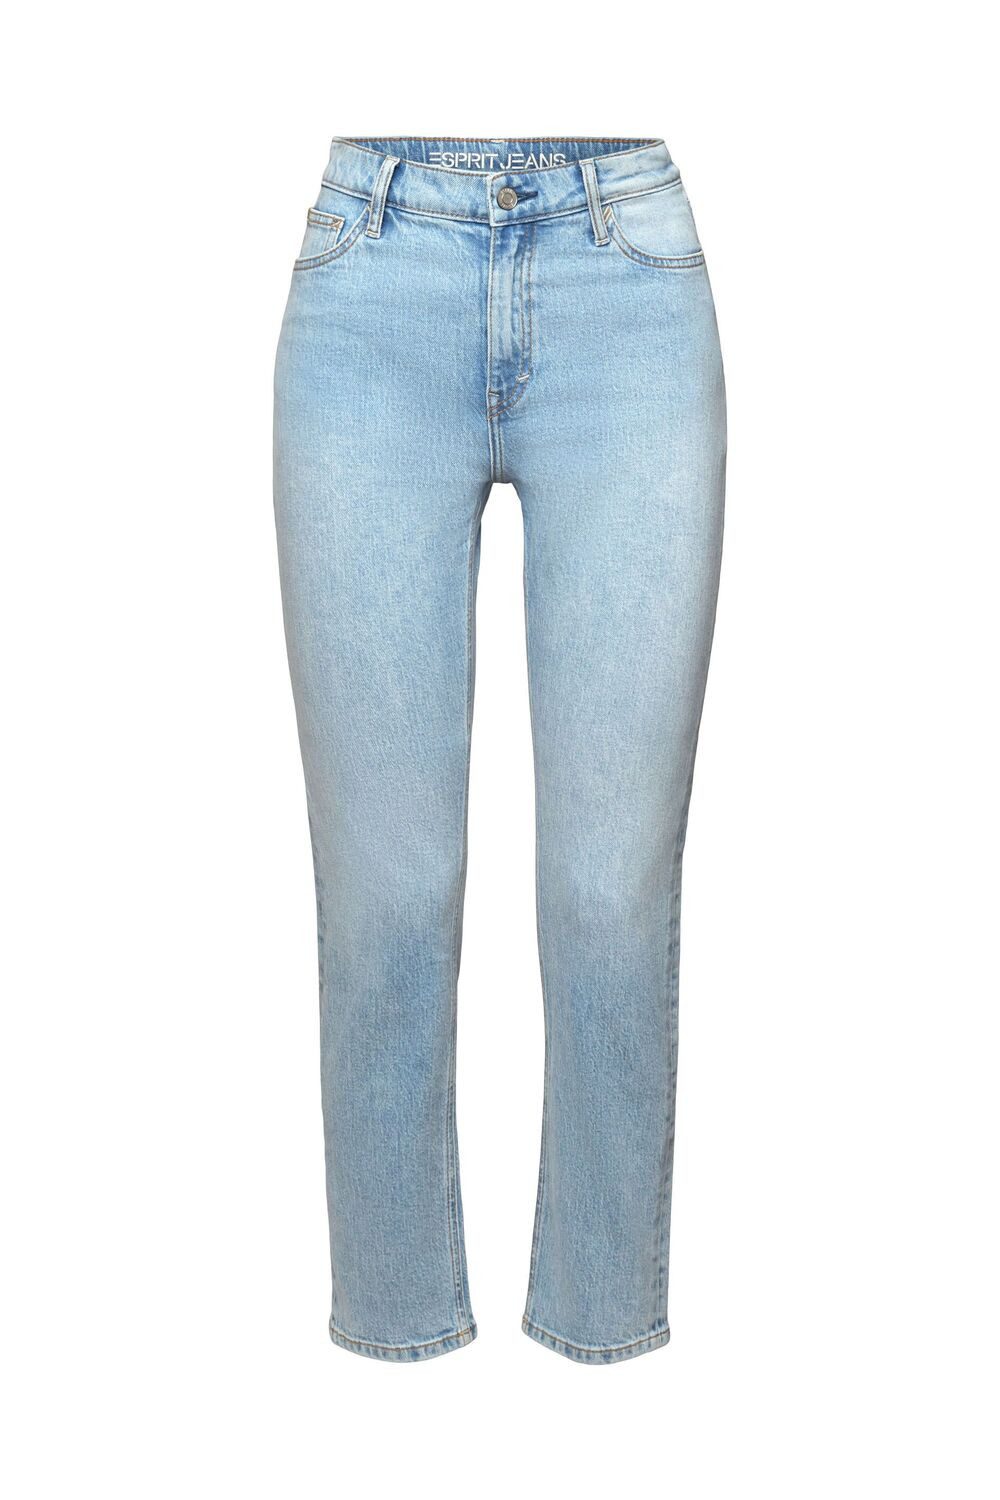 Esprit Regular-fit-Jeans RETRO SLIM, BLUE LIGHT WASH